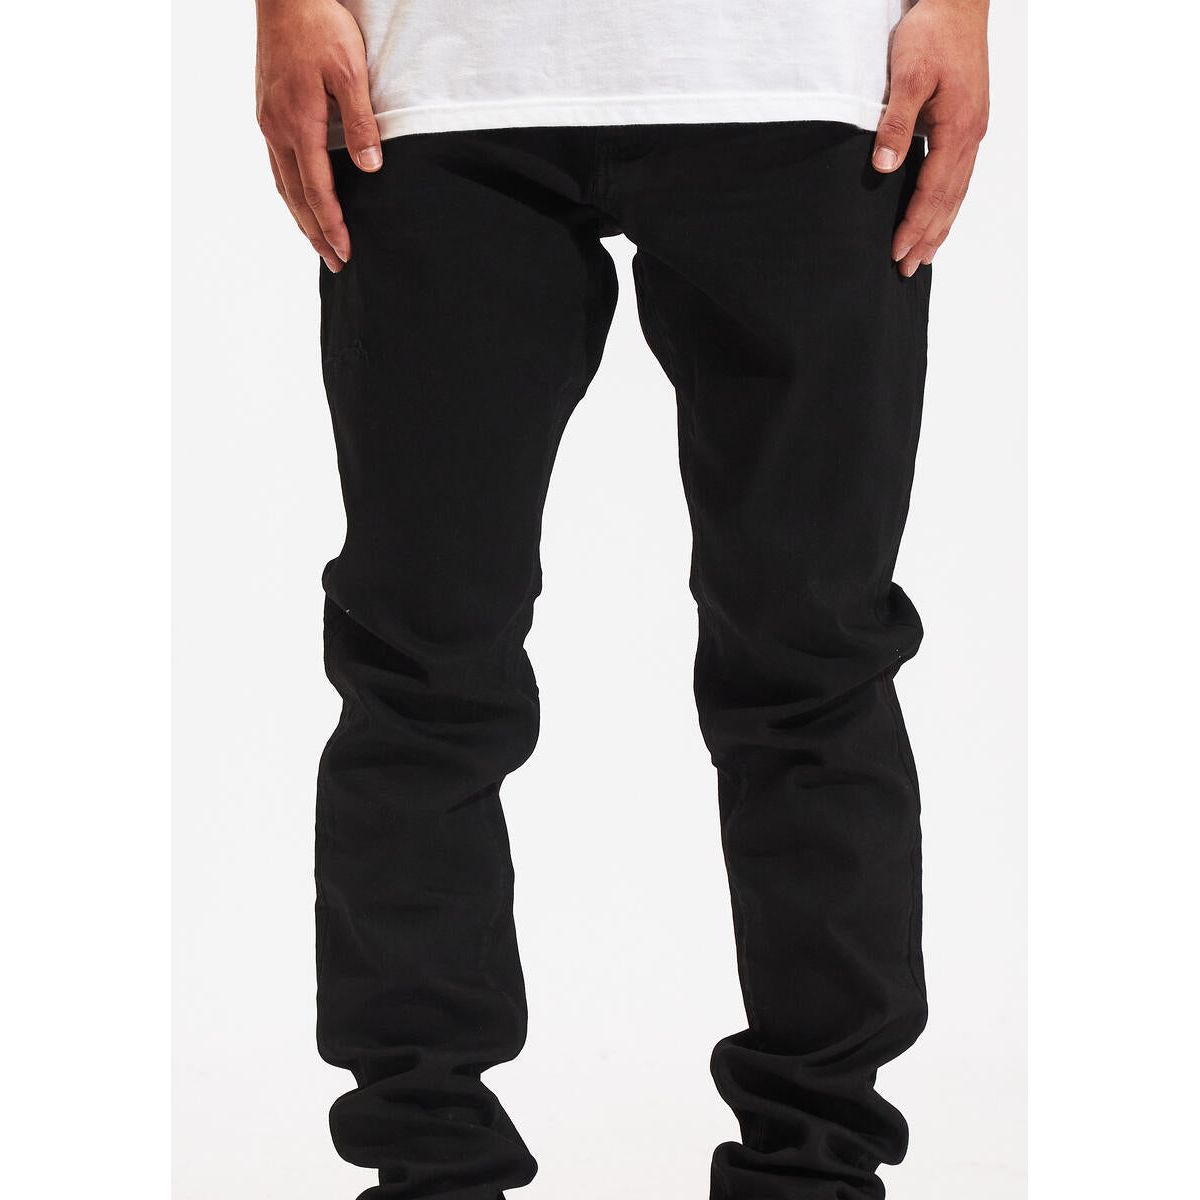 Crysp Denim Atlantic Regular Black Denim Jeans (CRYSPHOL23-13)